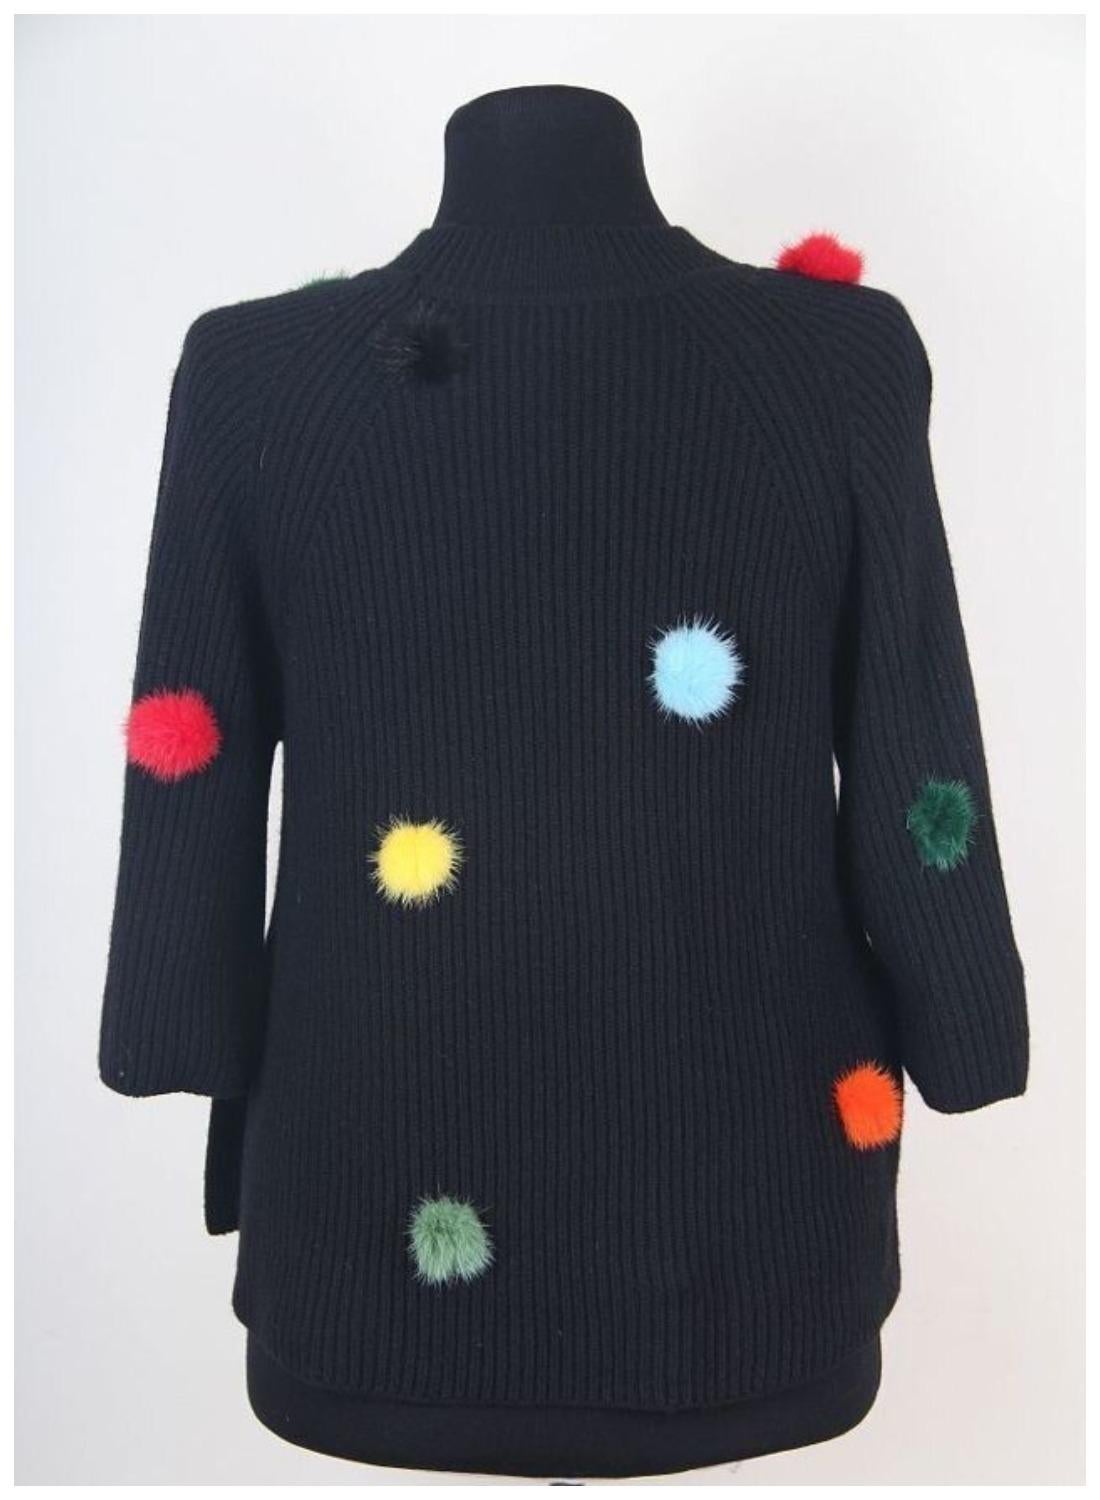  FENDI 2017  Fur-pompom High-neck Cashmere Sweater In Black In Excellent Condition For Sale In Алматинский Почтамт, KZ